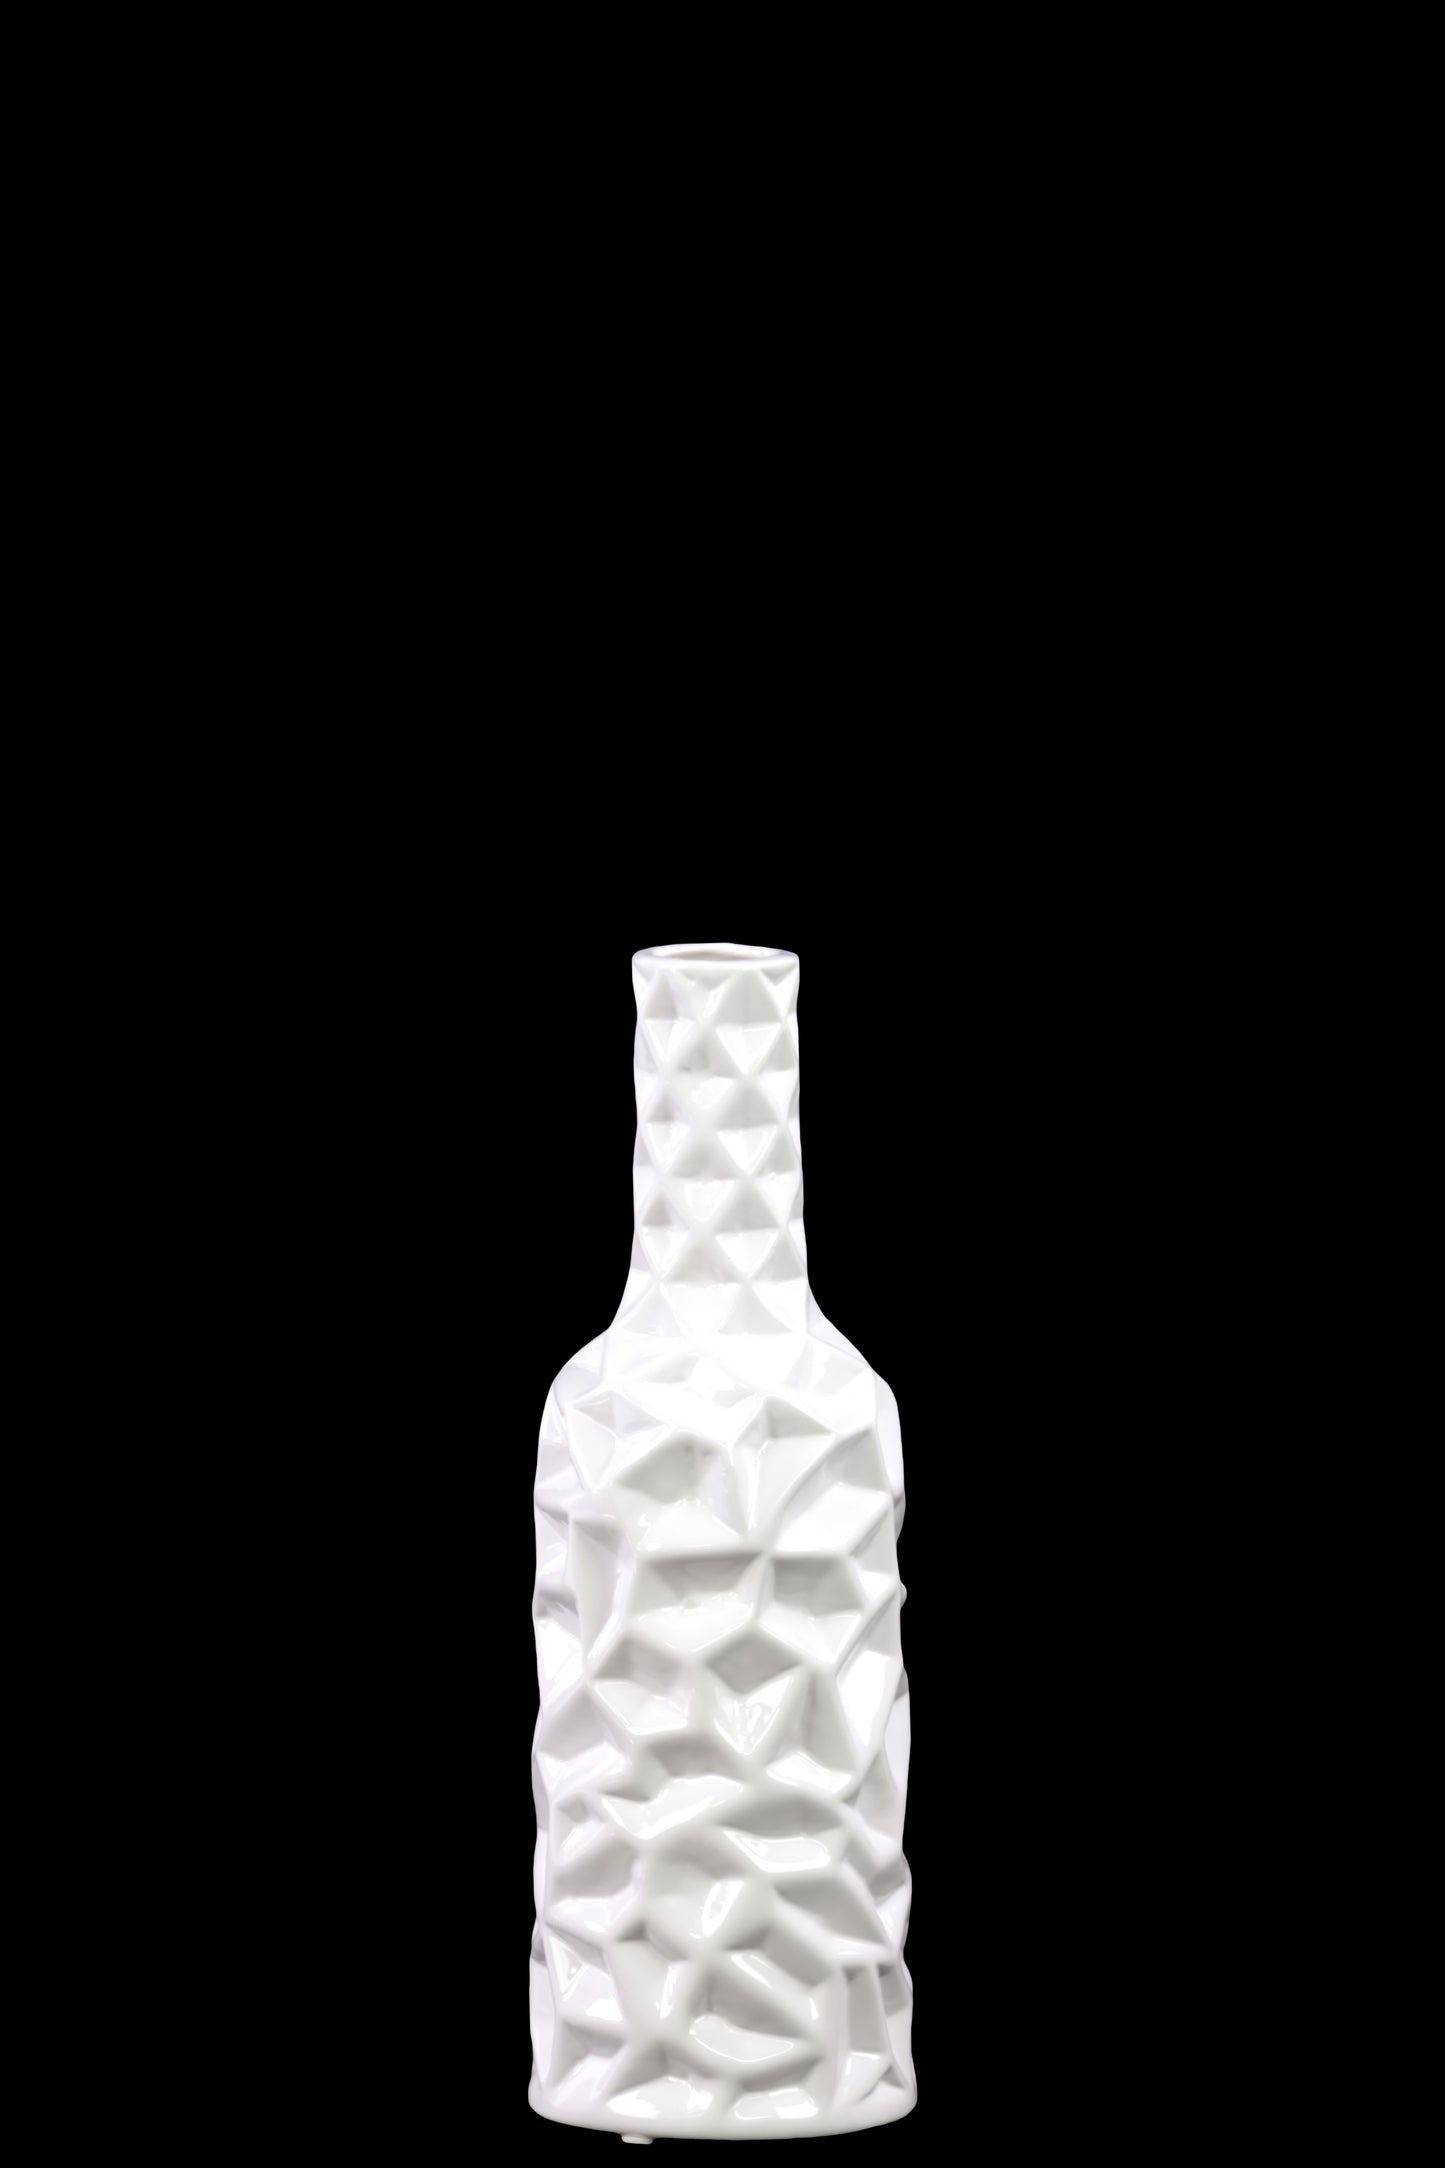 Ceramic Round Bottle Vase with Wrinkled Sides Gloss Finish